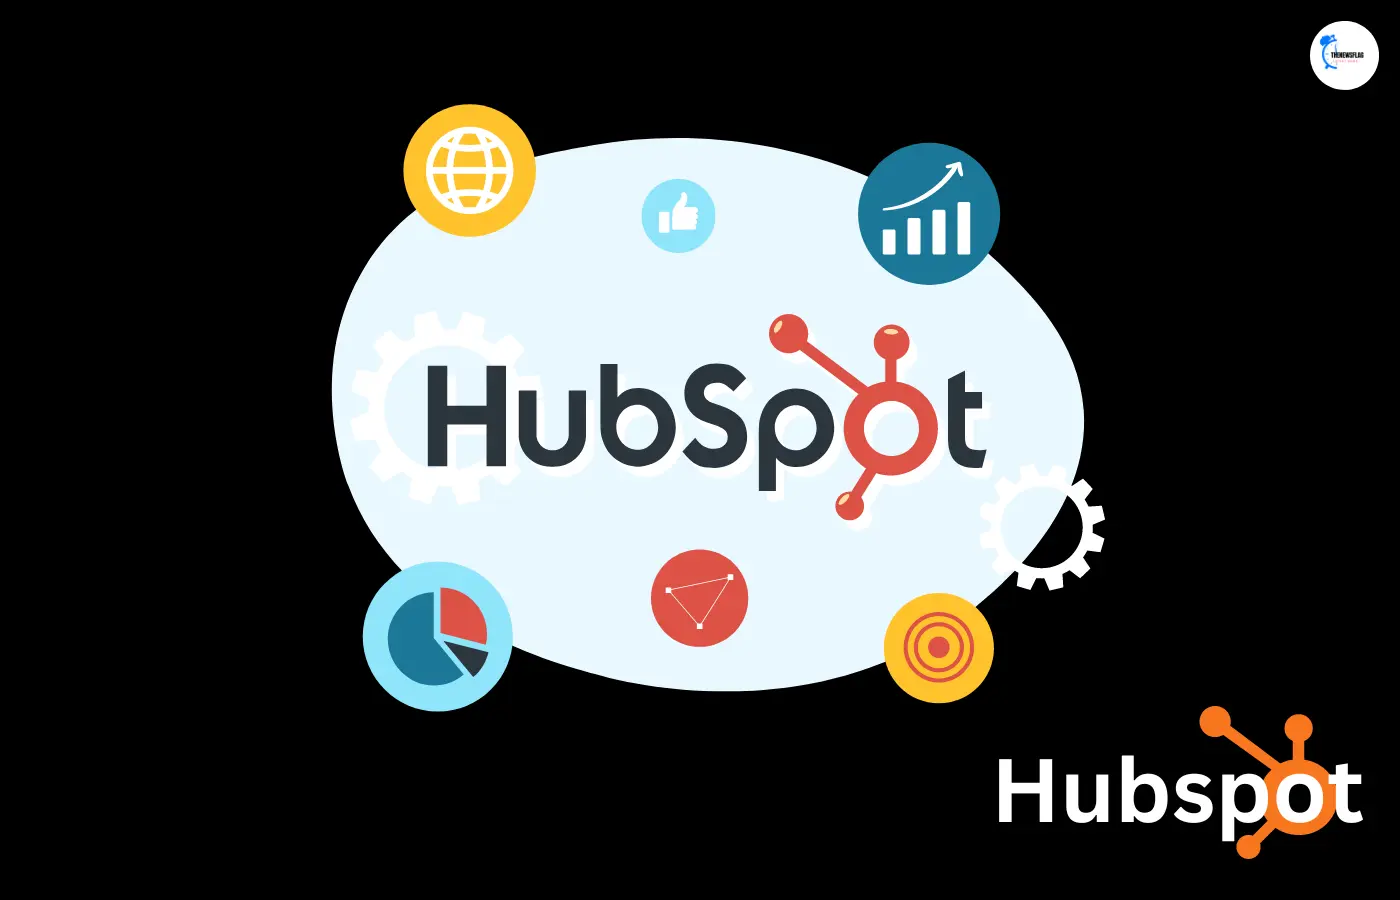 How hubspot social media marketing is helpful for new statups?